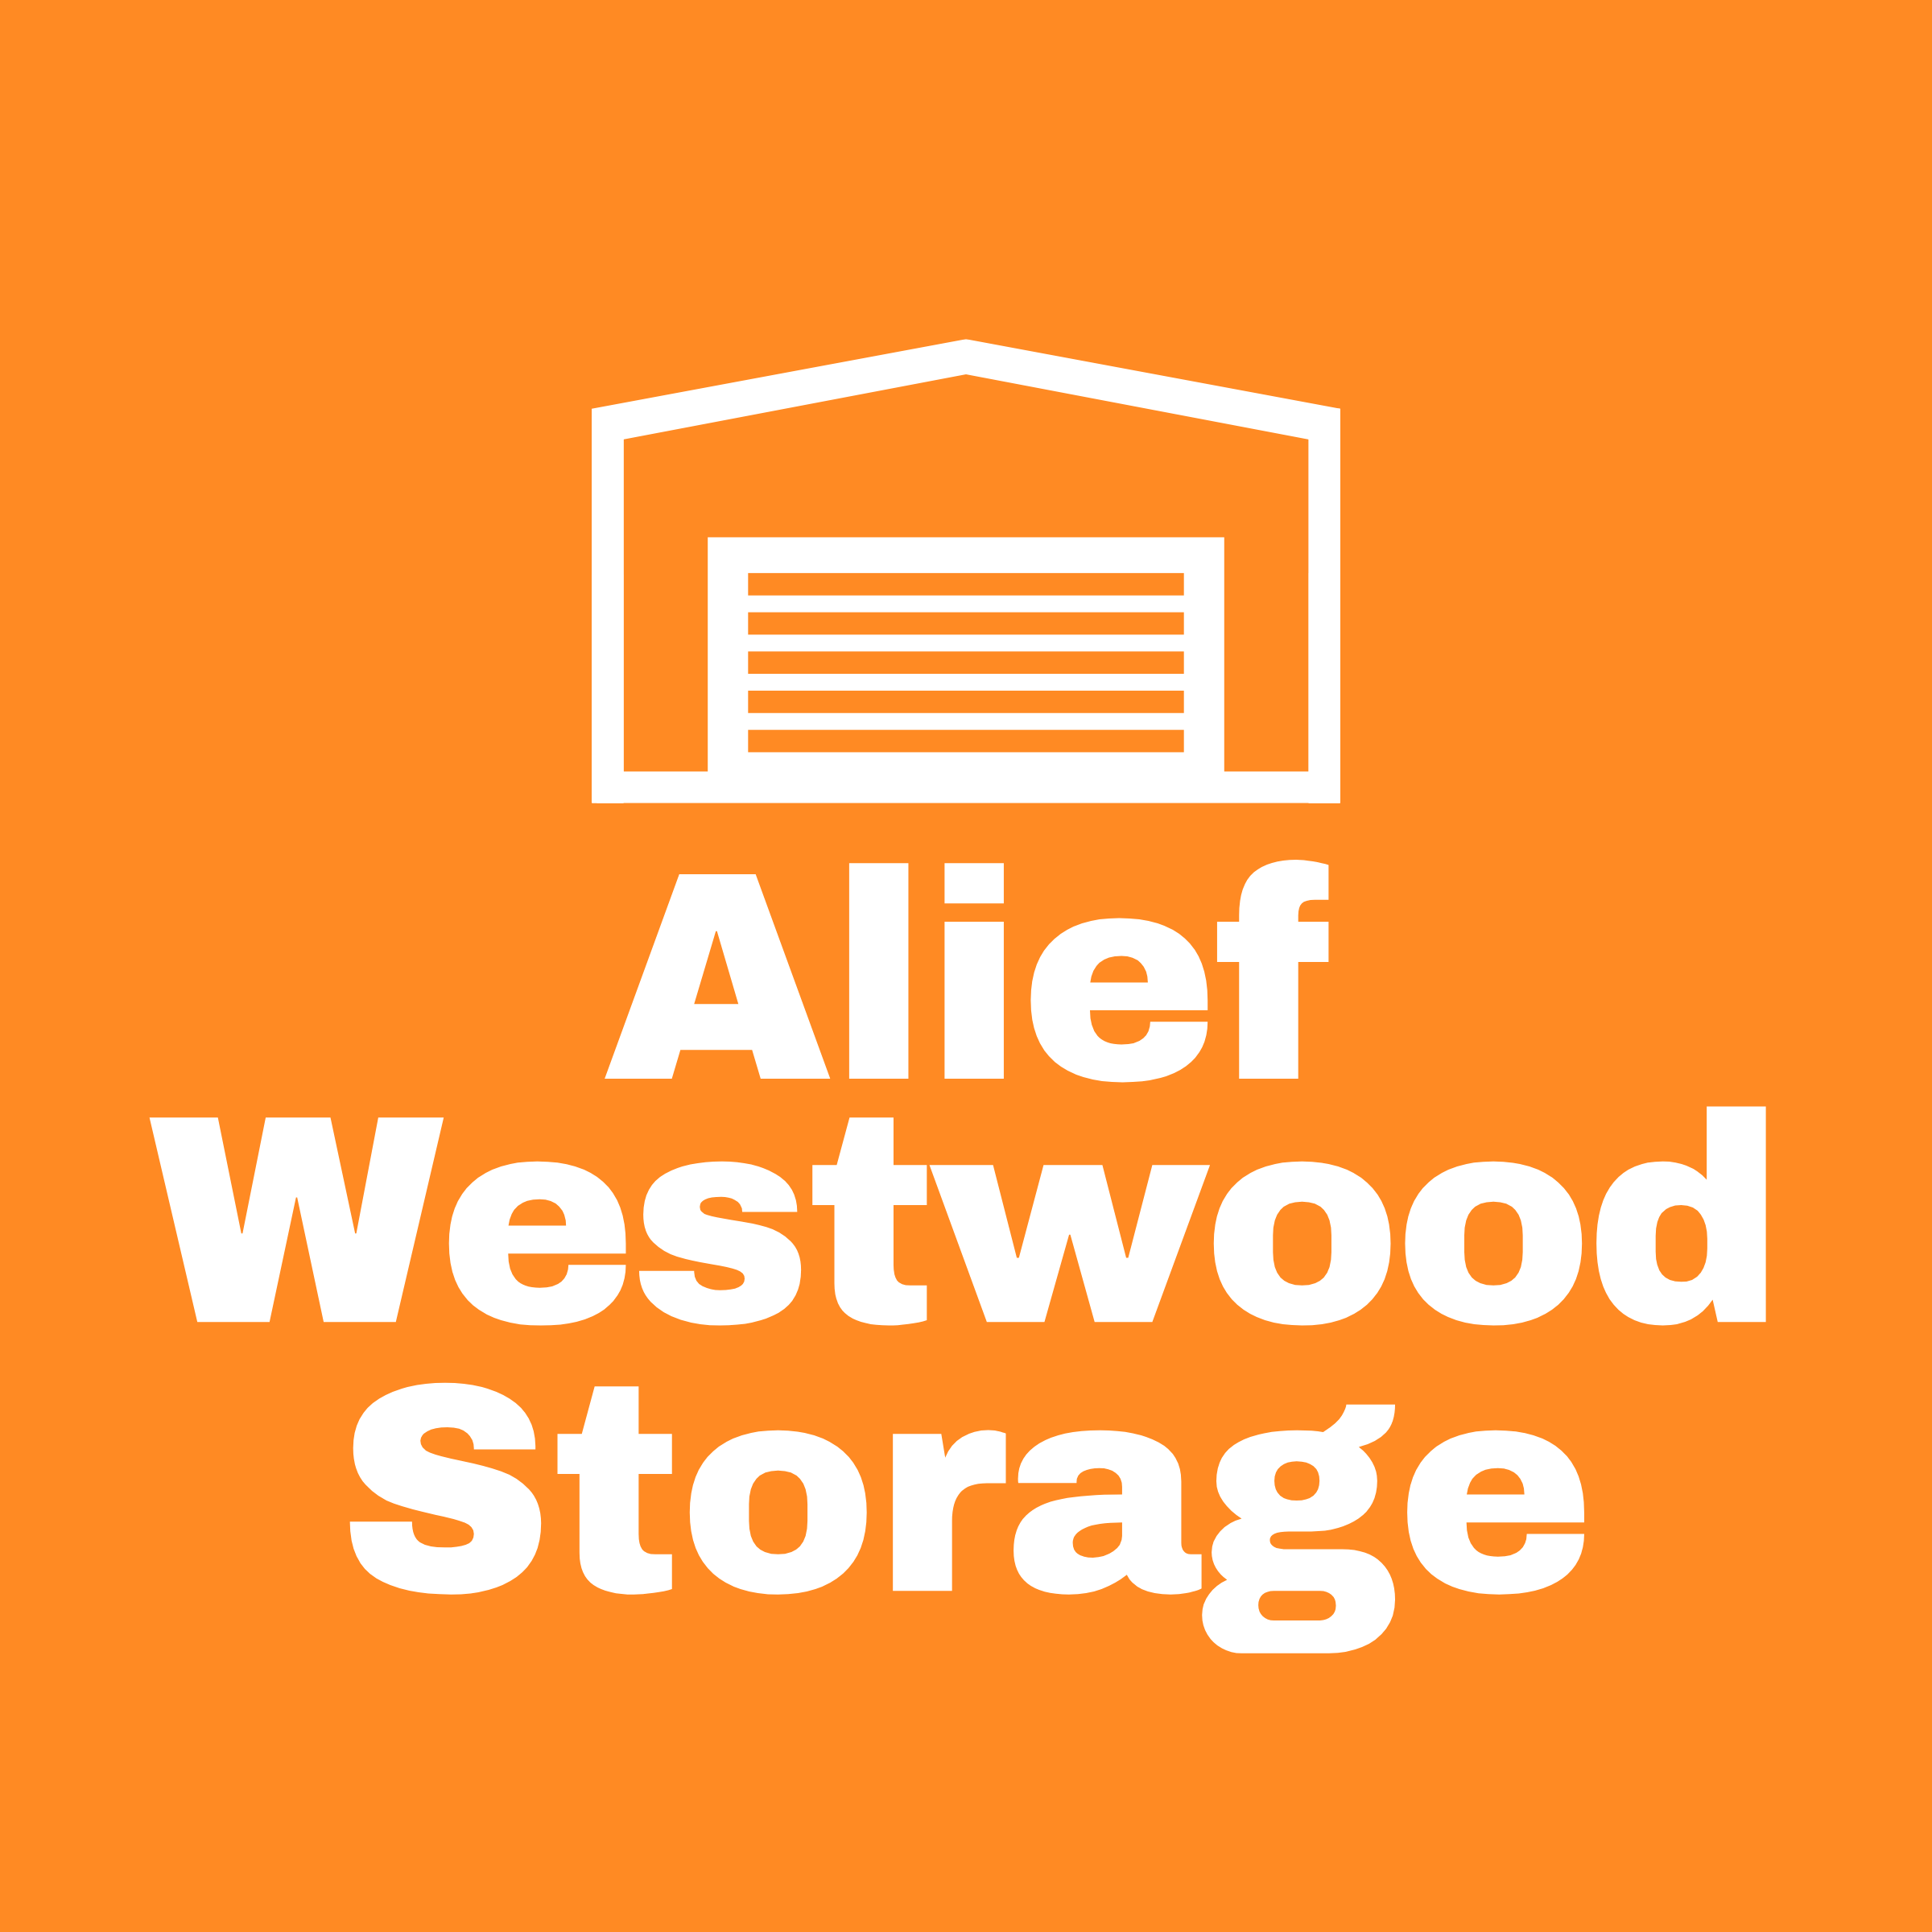 Alief Westwood Storage